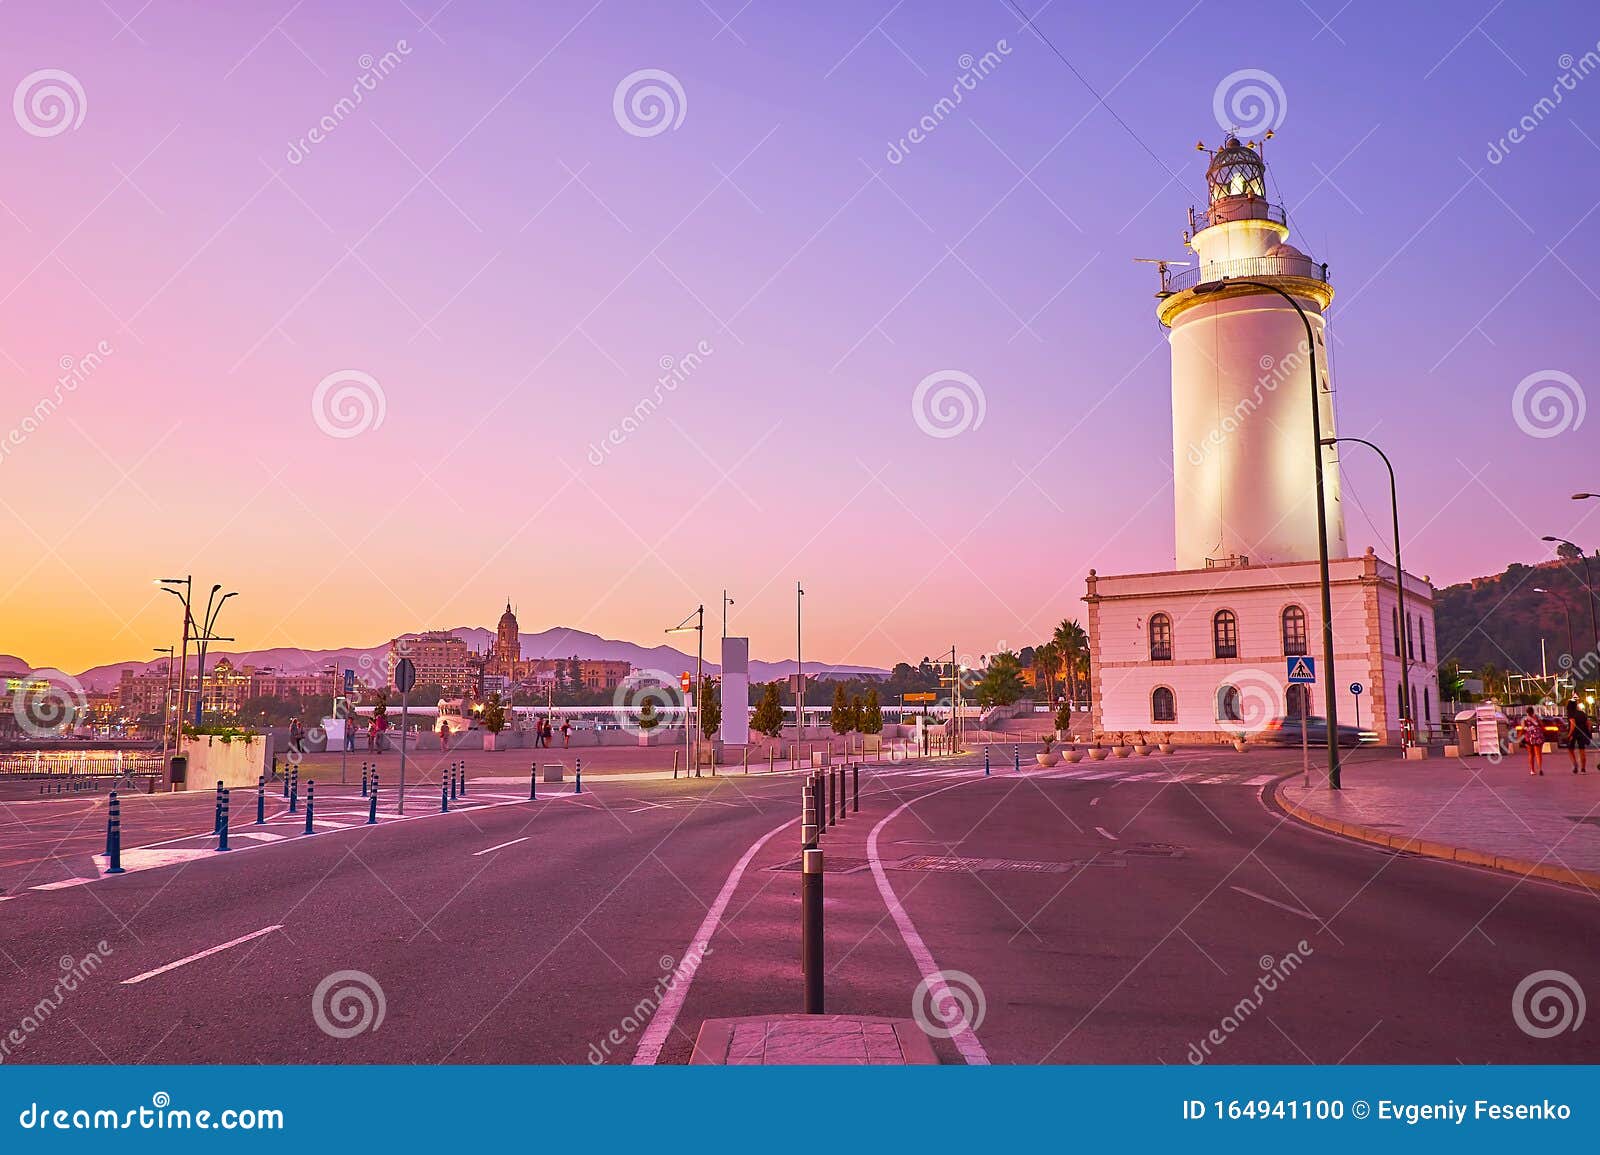 malaga lighthouse on twilight, spain